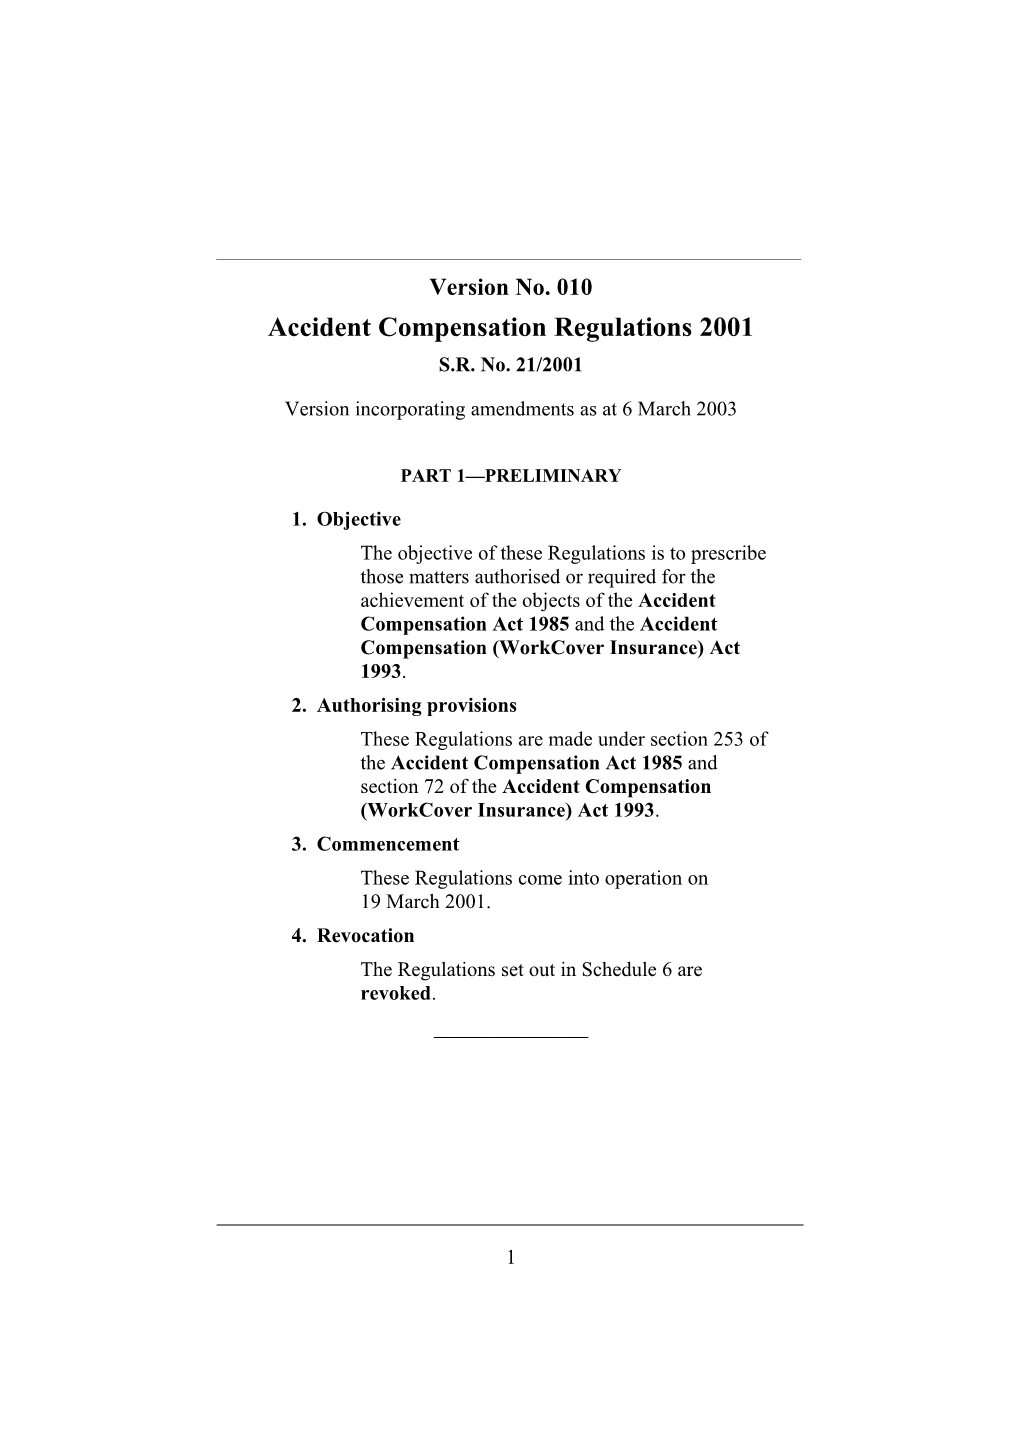 Accident Compensation Regulations 2001